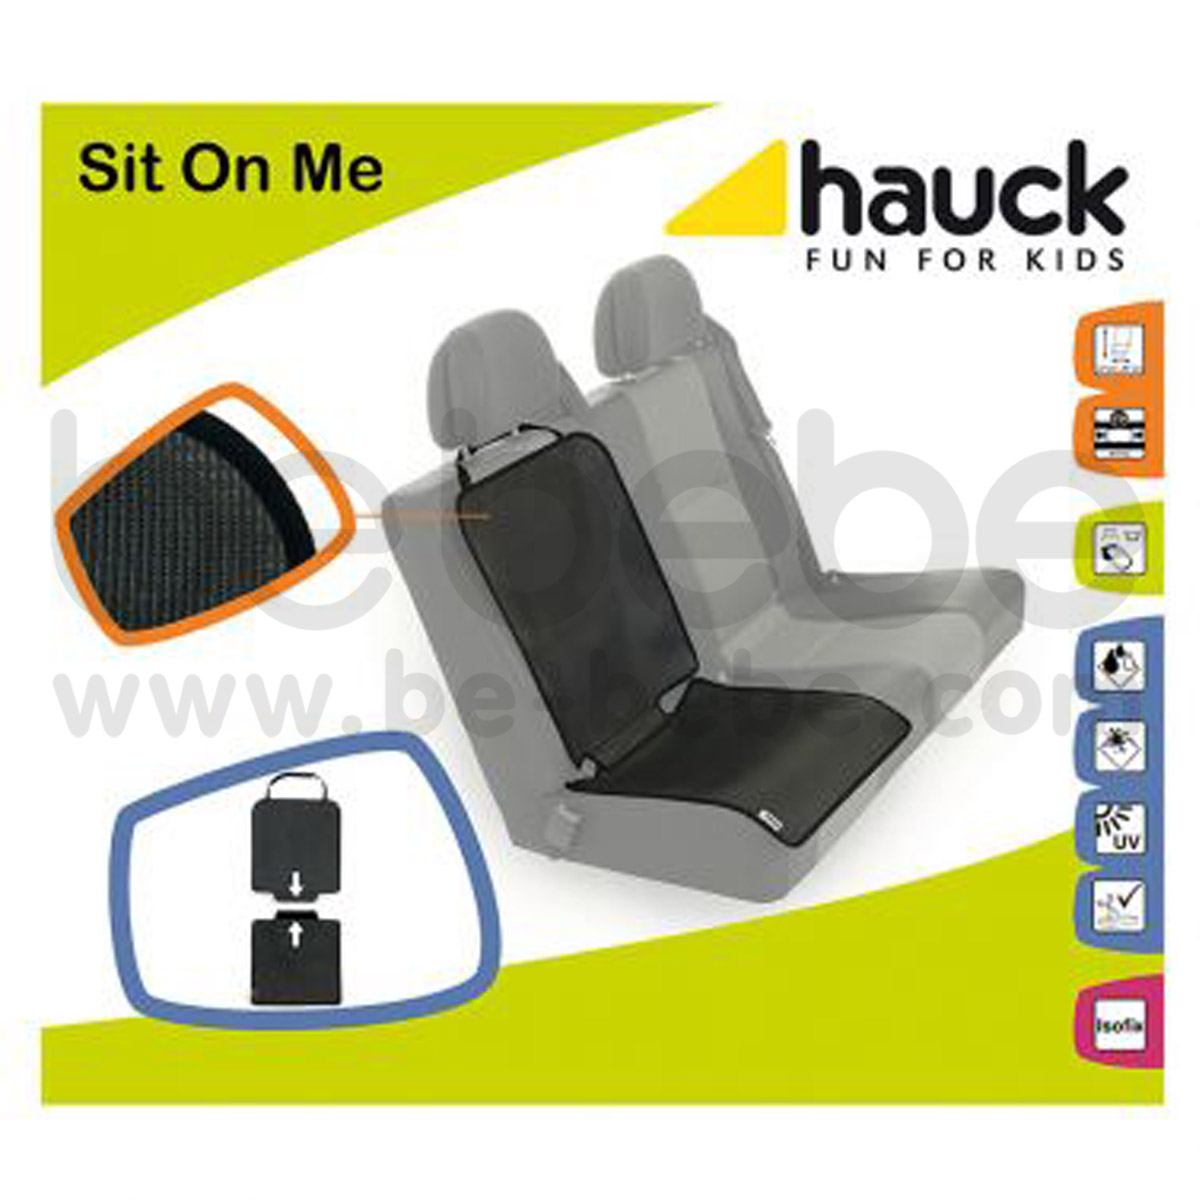 Hauck : รองคาร์ซีท Sit On Me RT 1190